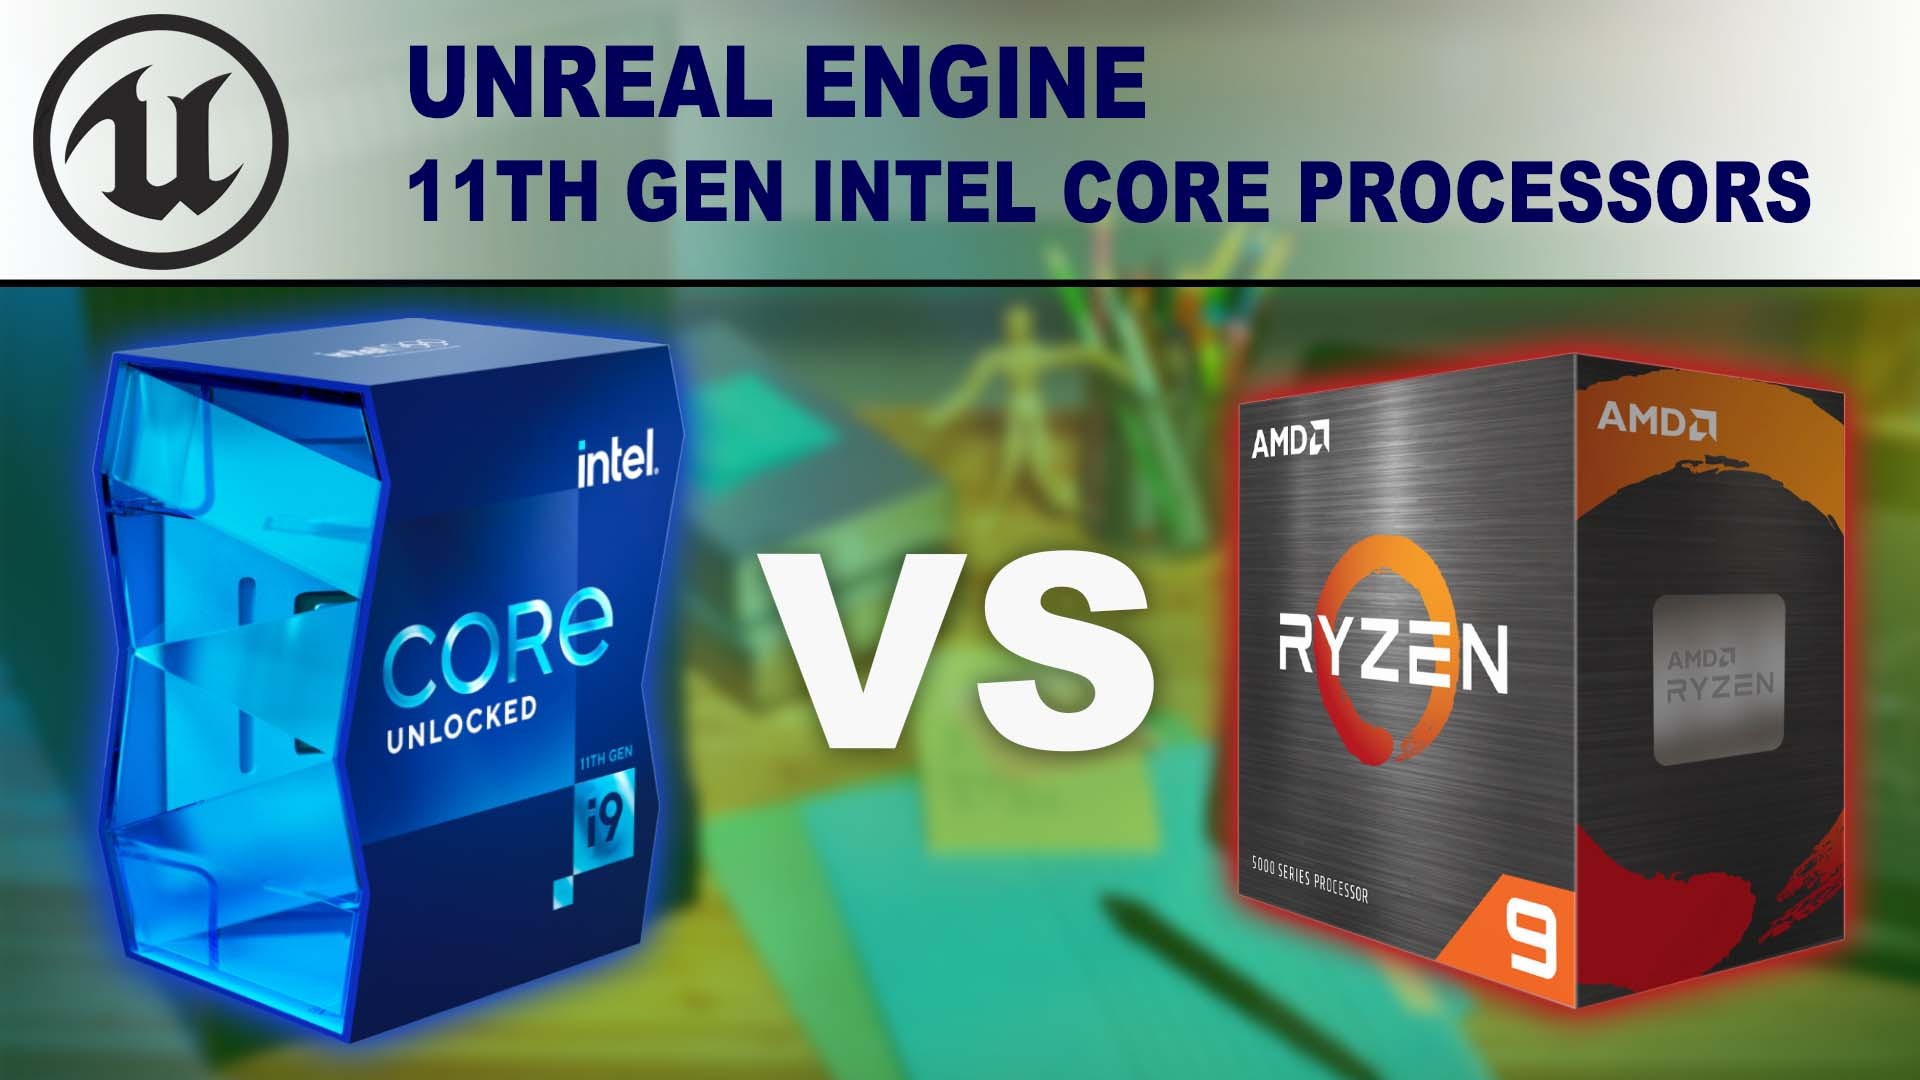 11th Gen Intel Core Processors for Unreal Engine